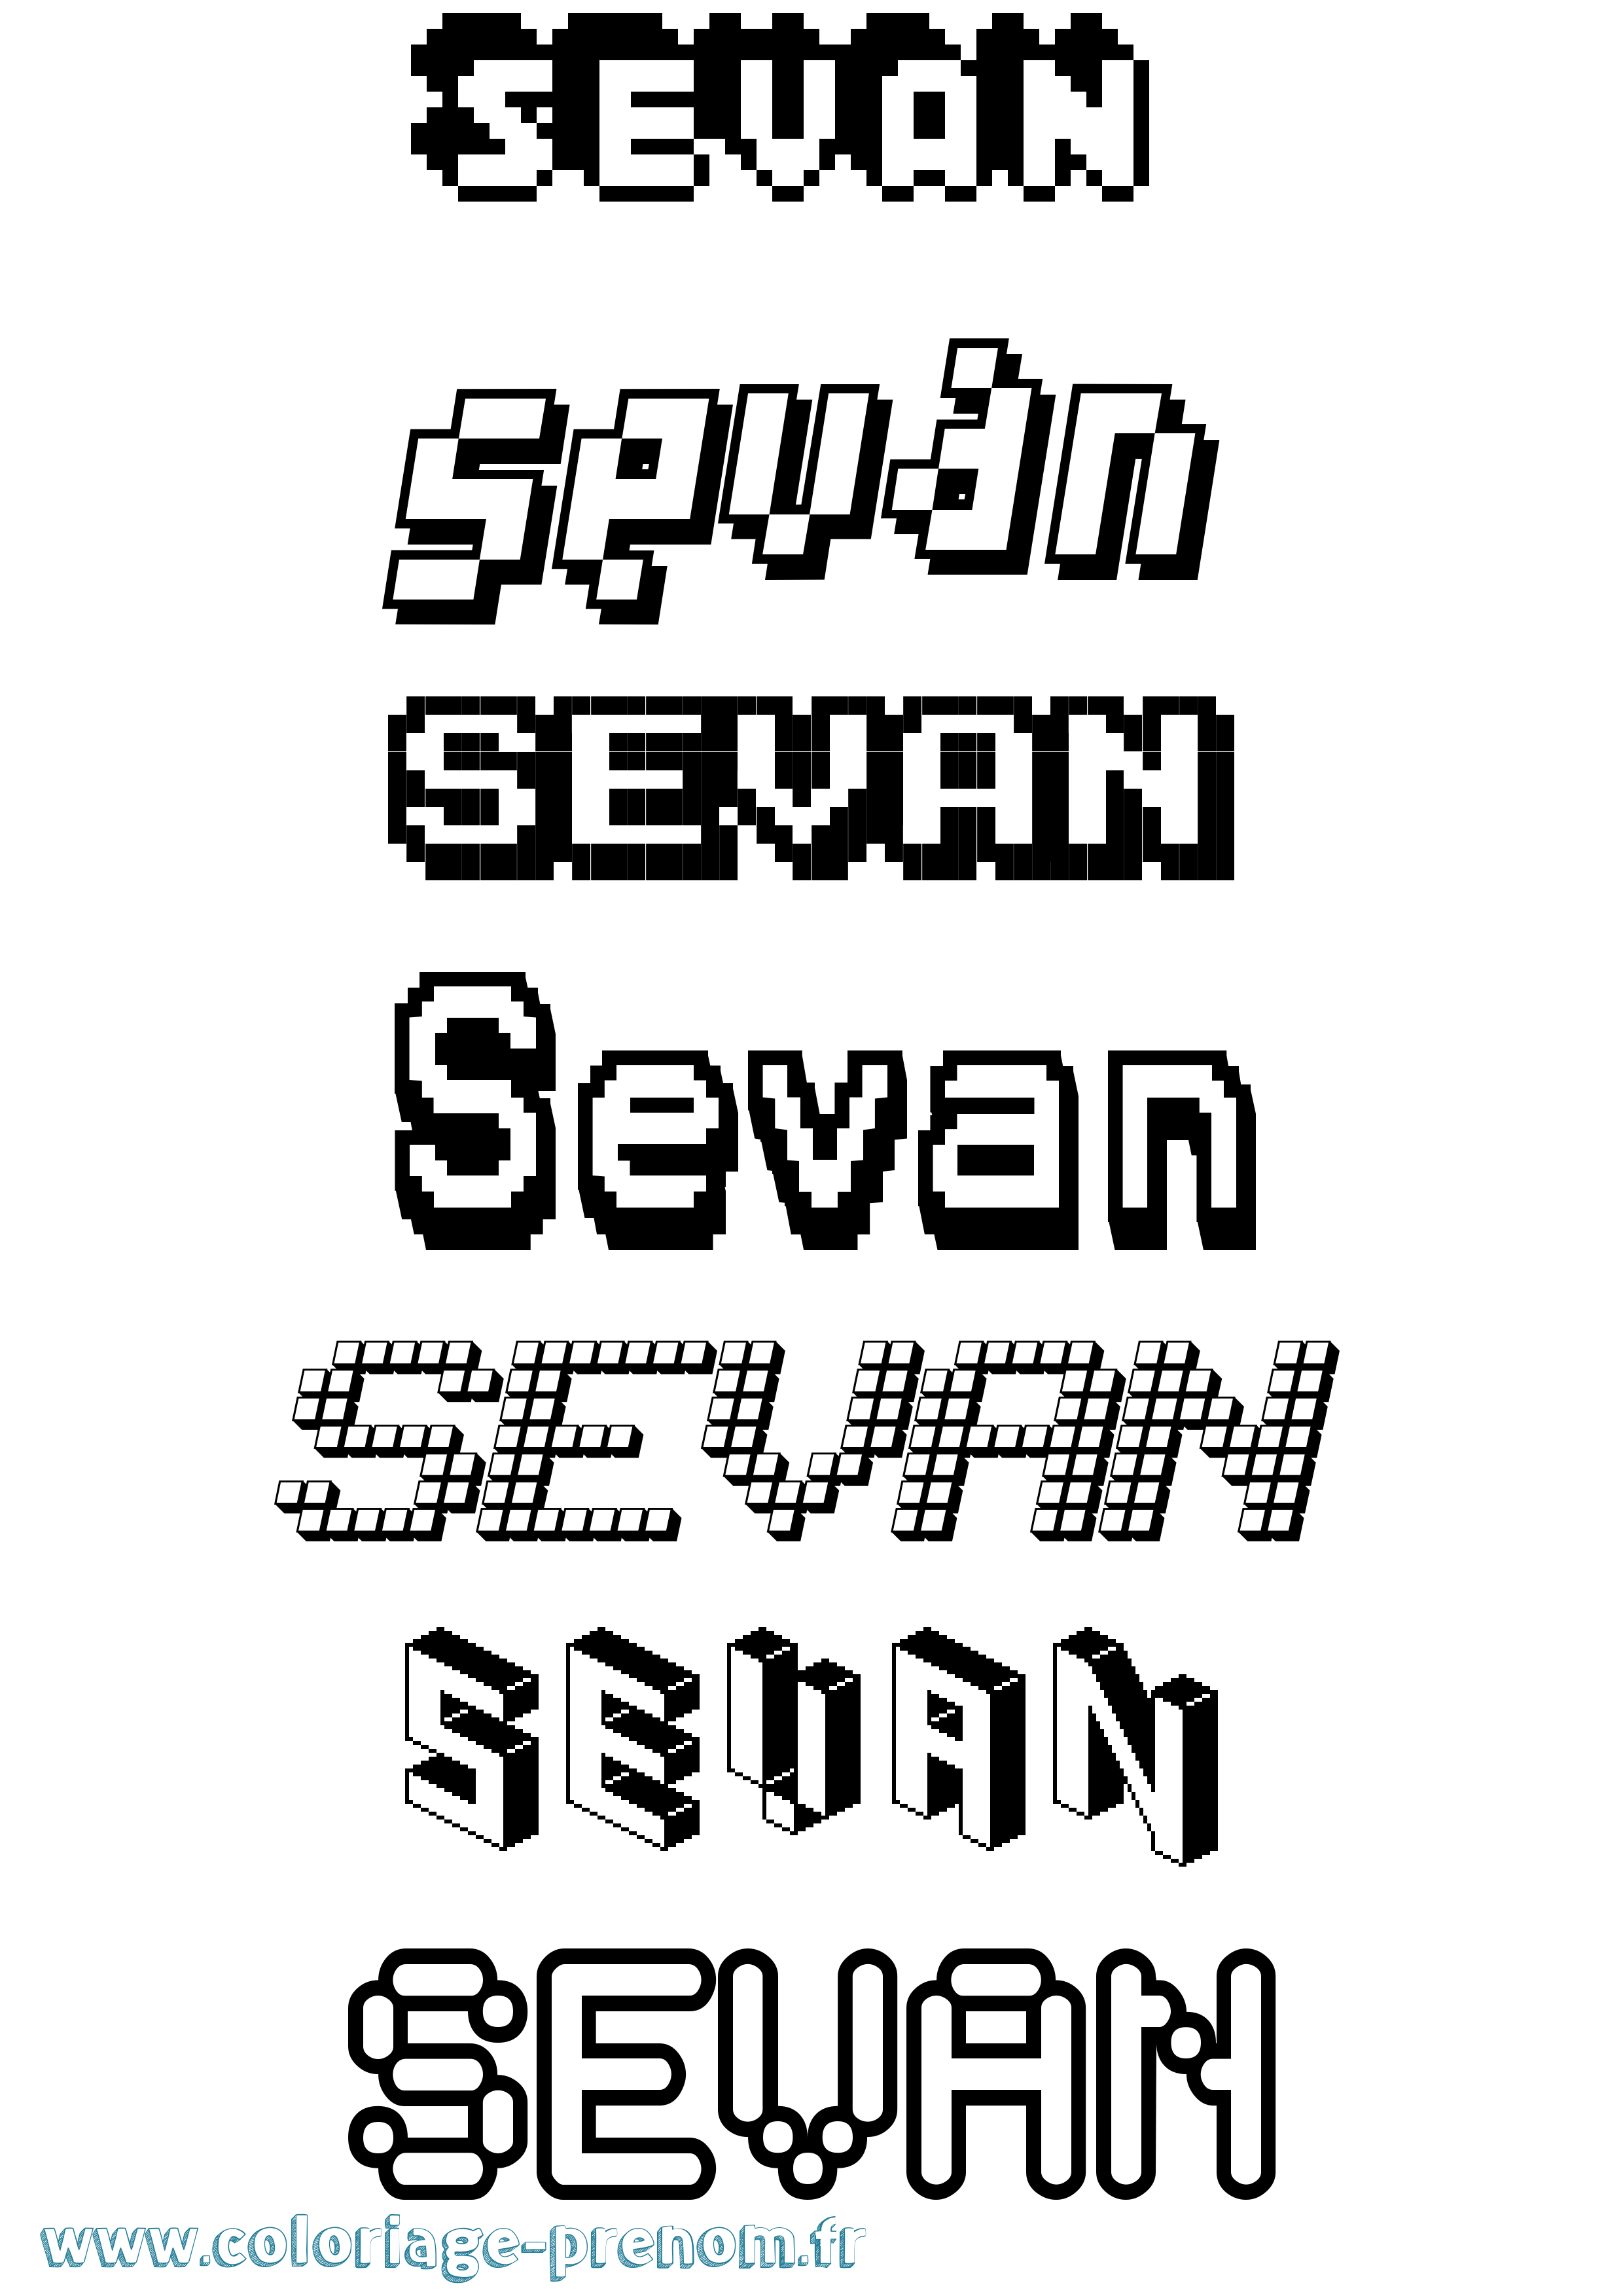 Coloriage prénom Sevan Pixel